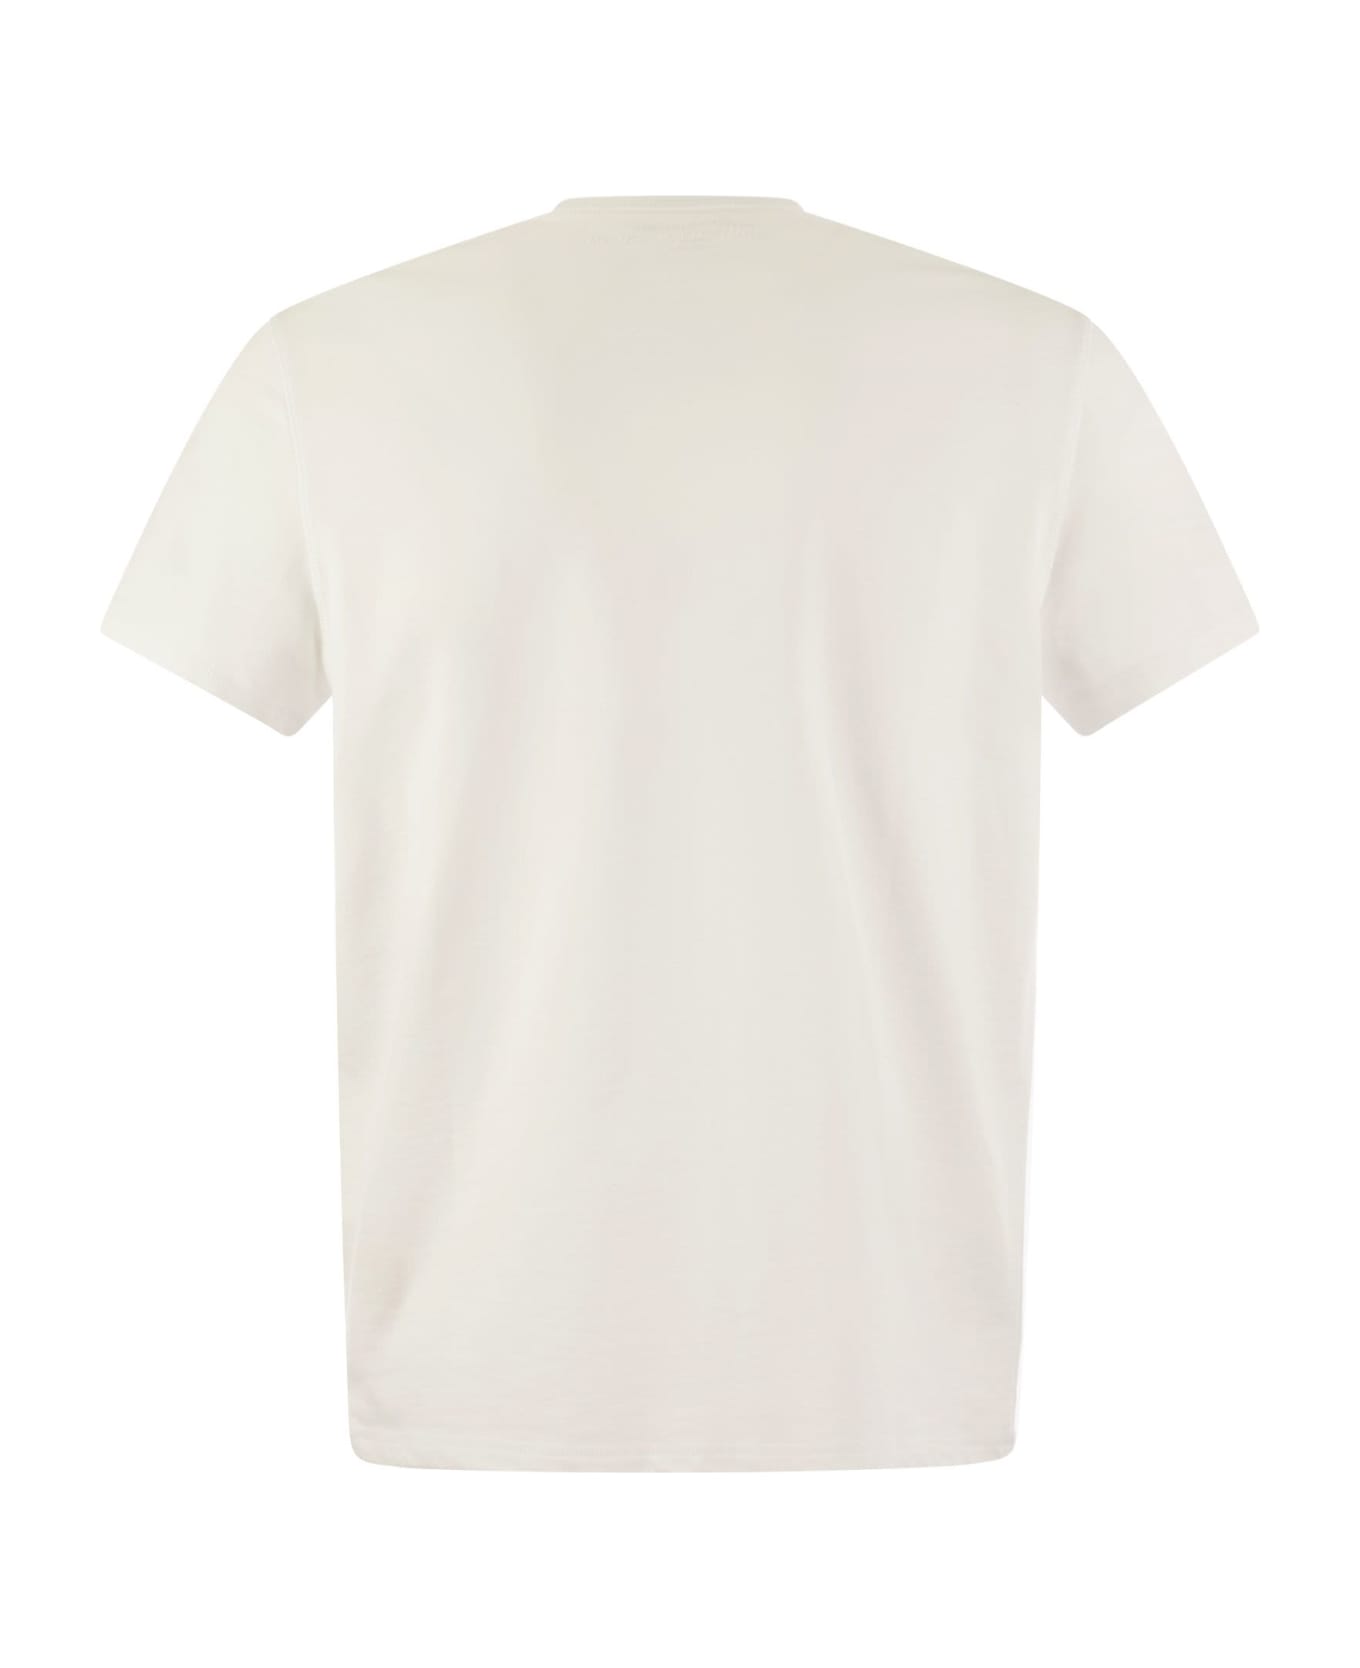 Majestic Filatures Crew-neck Cotton T-shirt - White シャツ